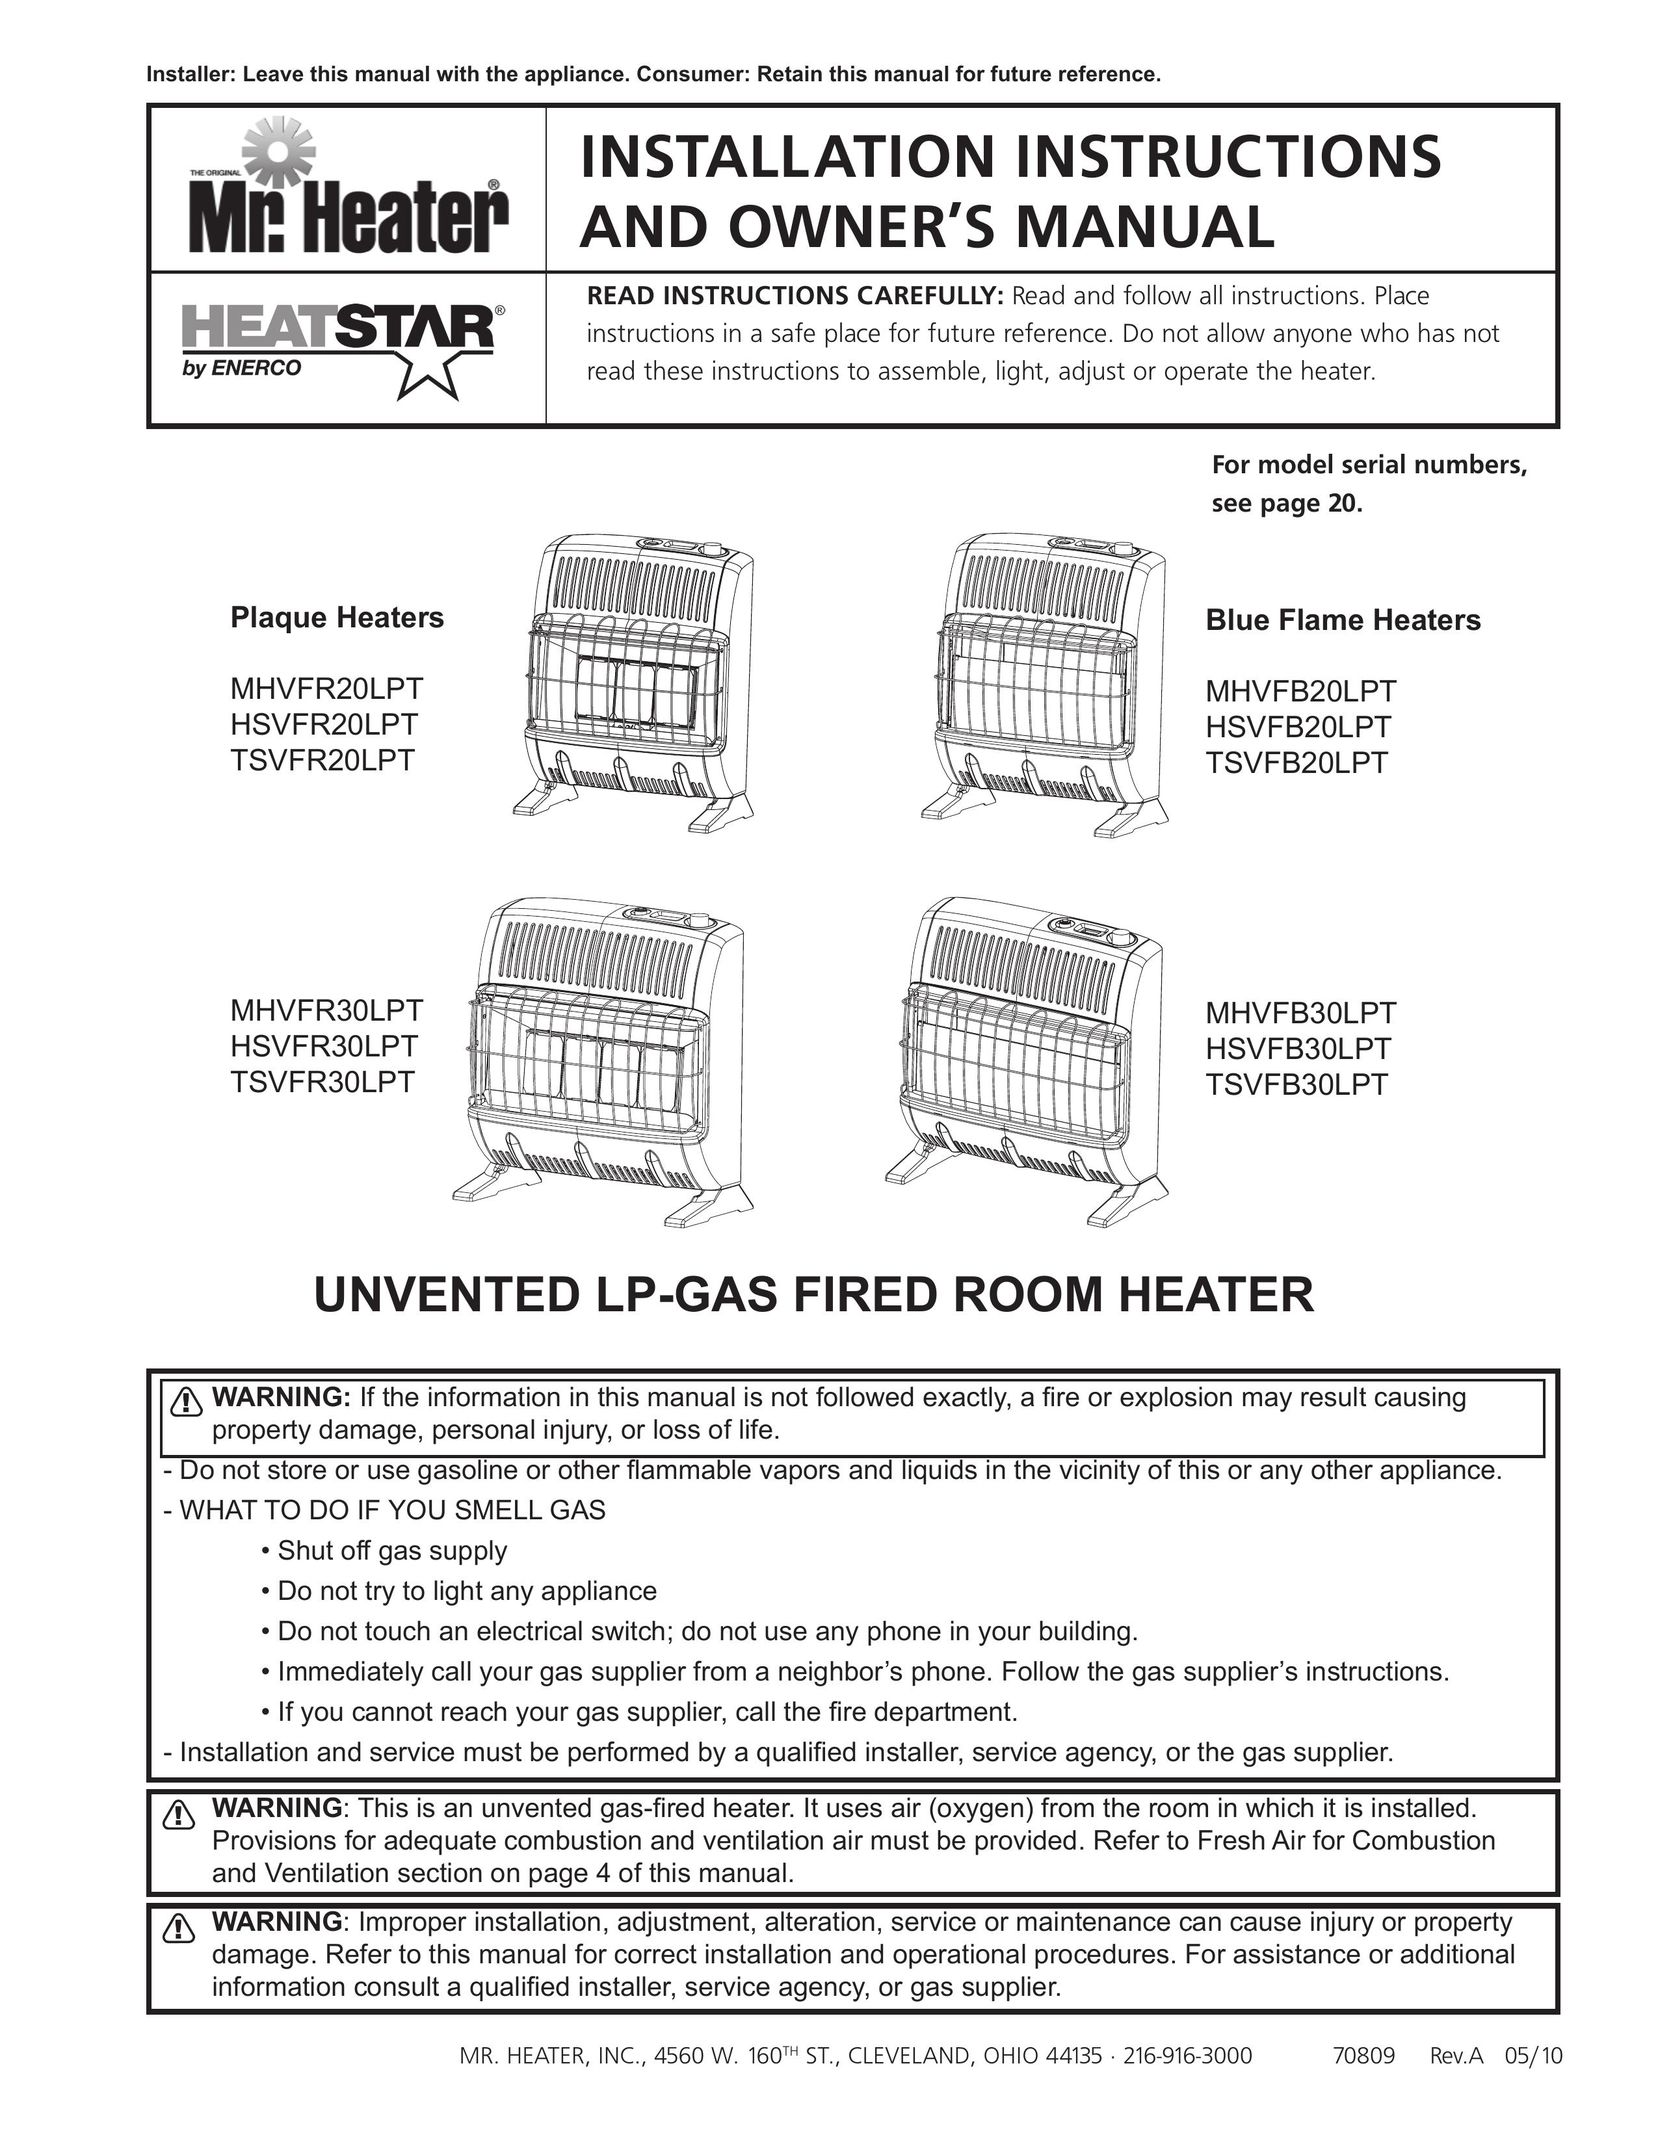 Enerco HSVFR30LPT Gas Heater User Manual